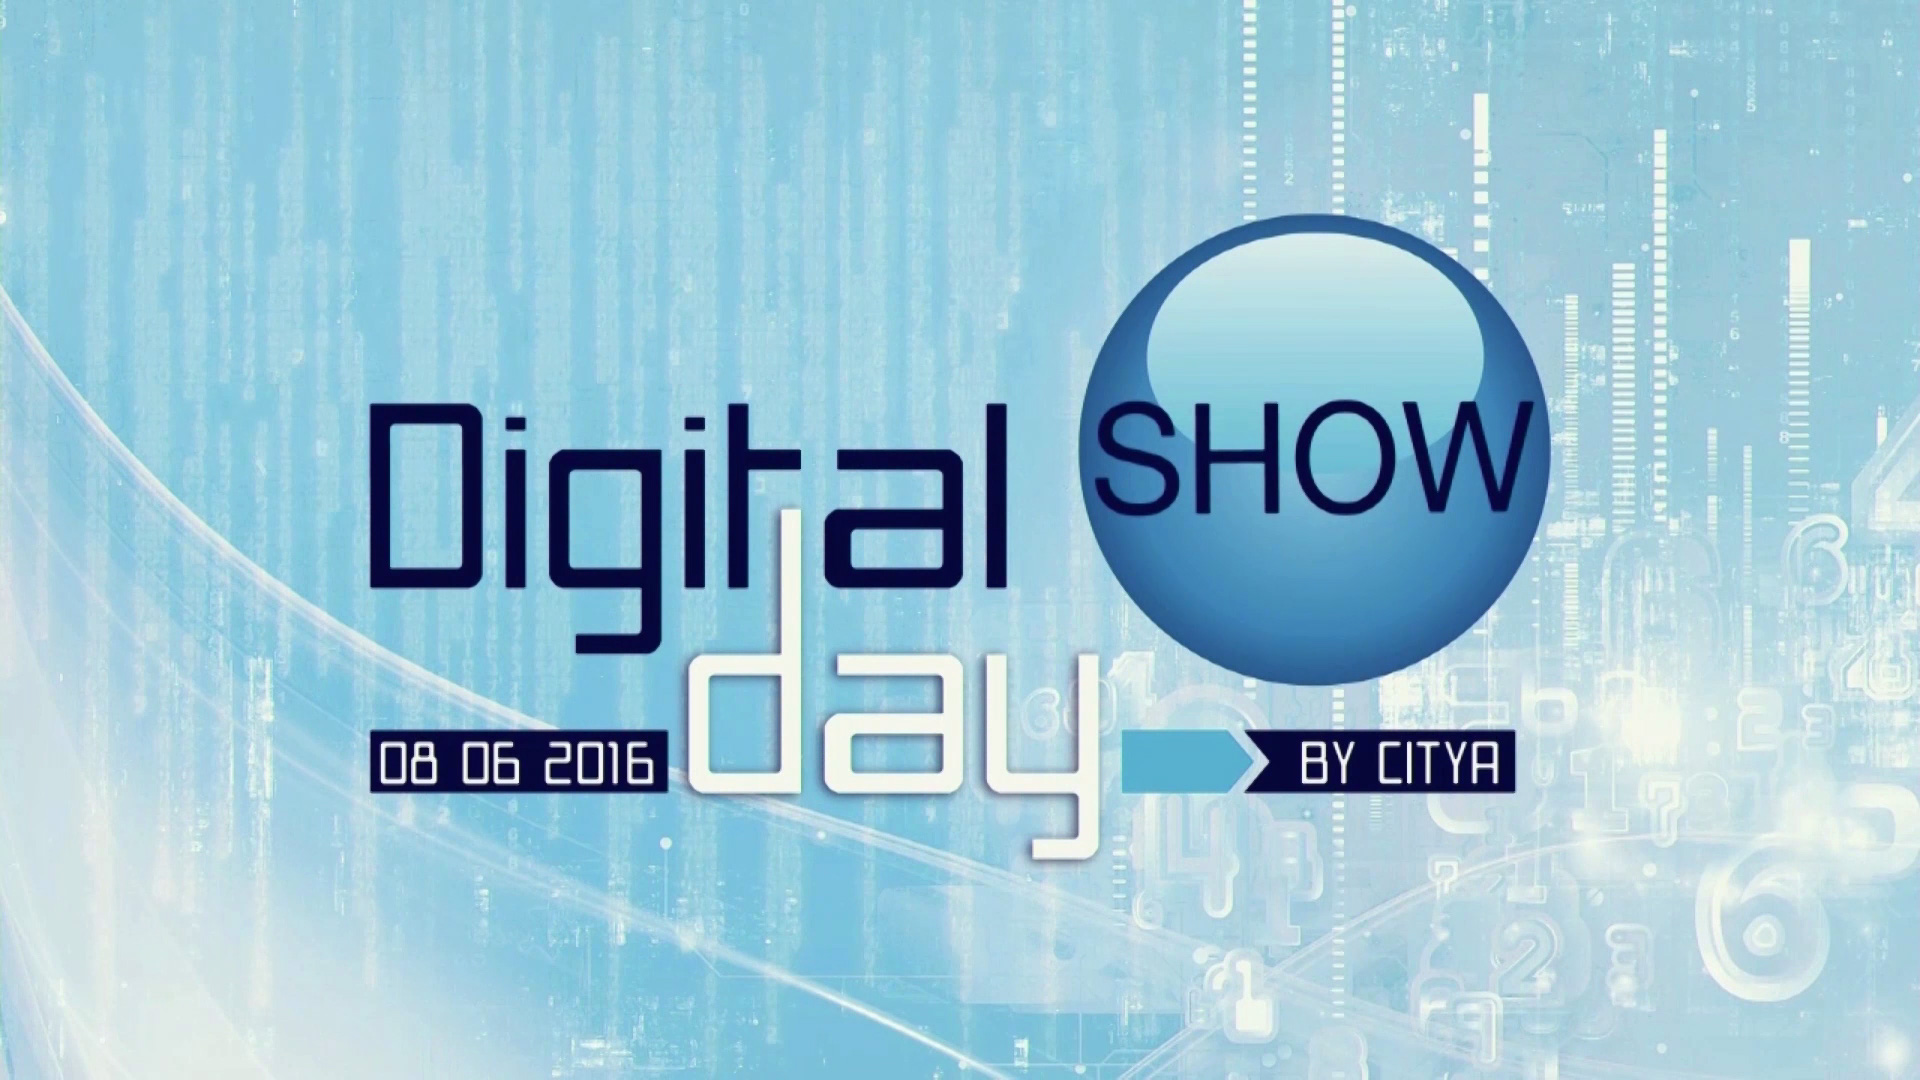 Directeurs - 2016 - Lyon - Citya Digital Day Show